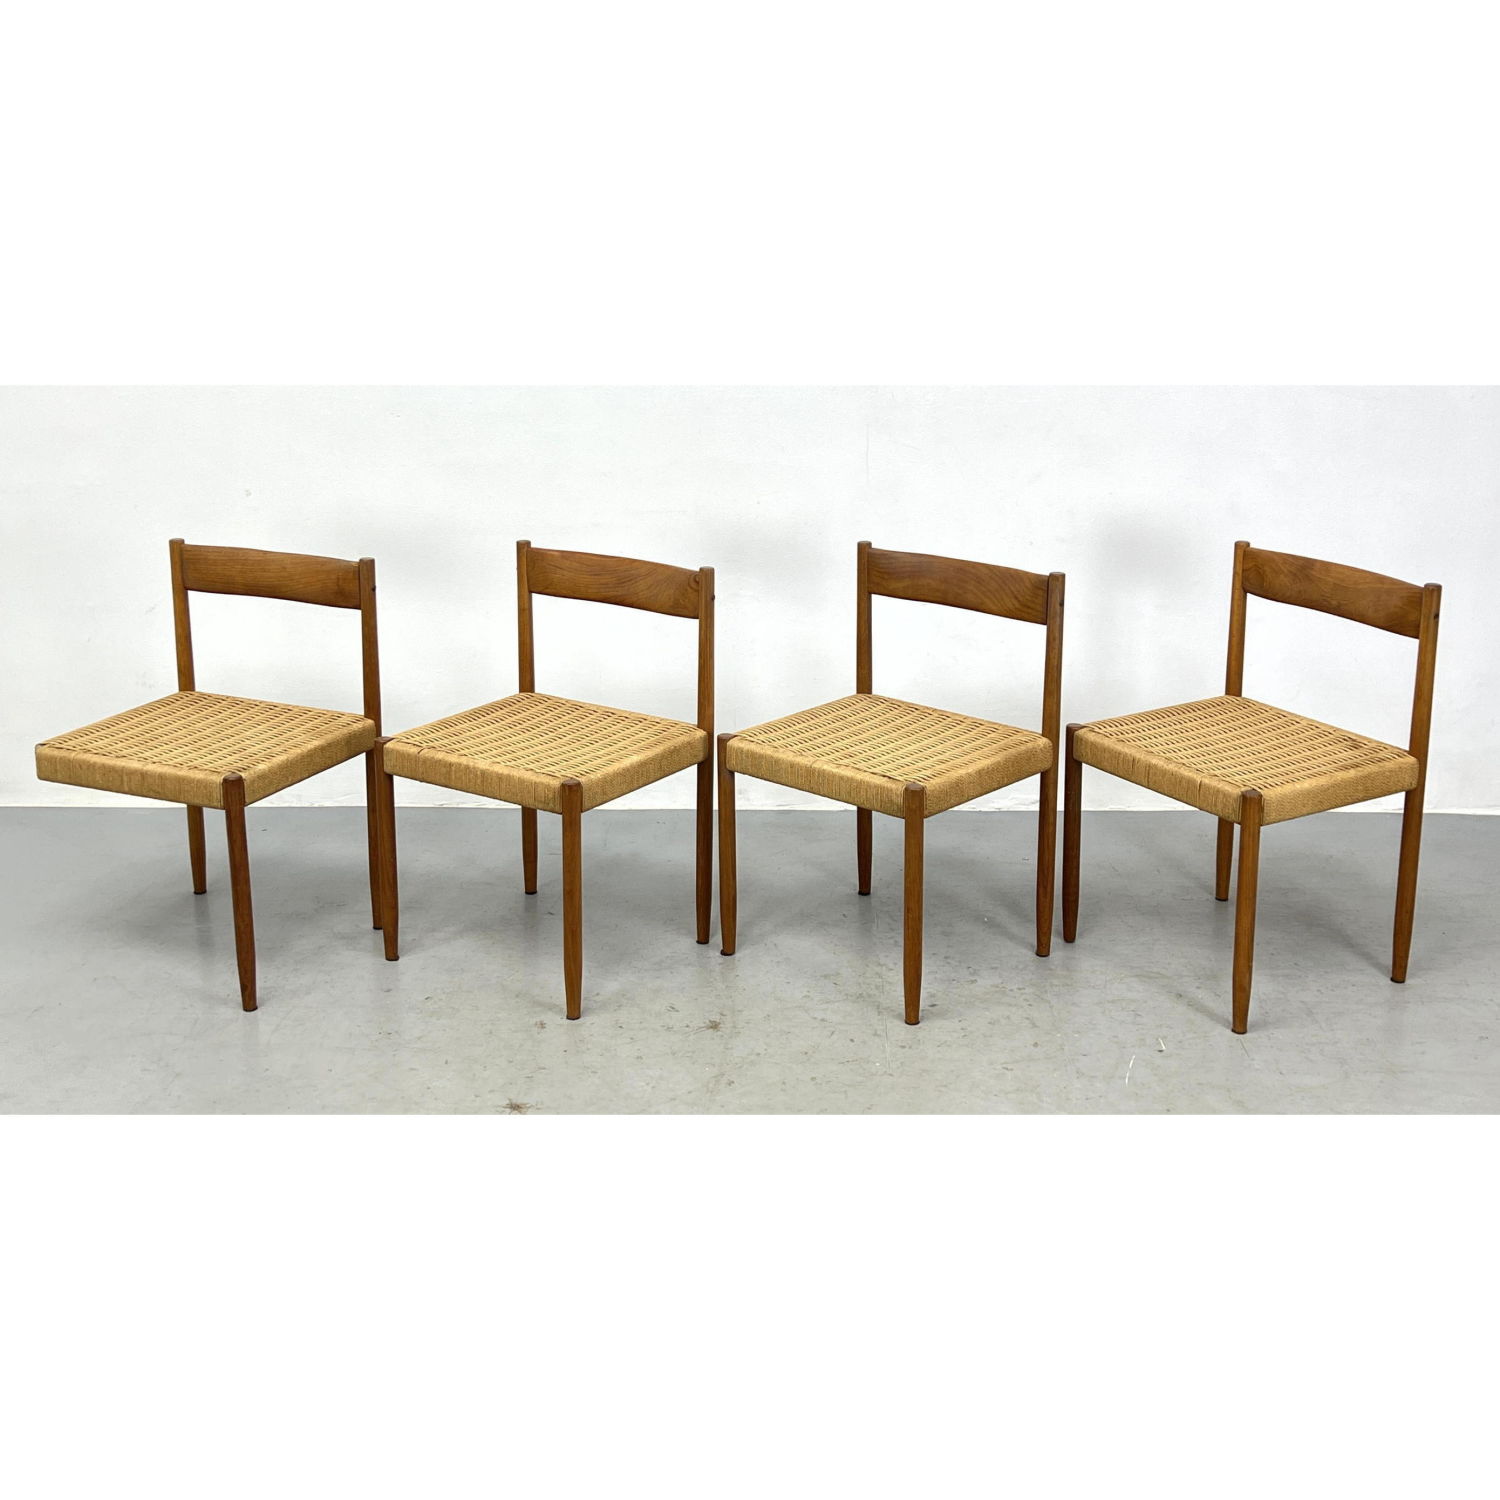 Set 4 Danish Teak Dining Chairs.